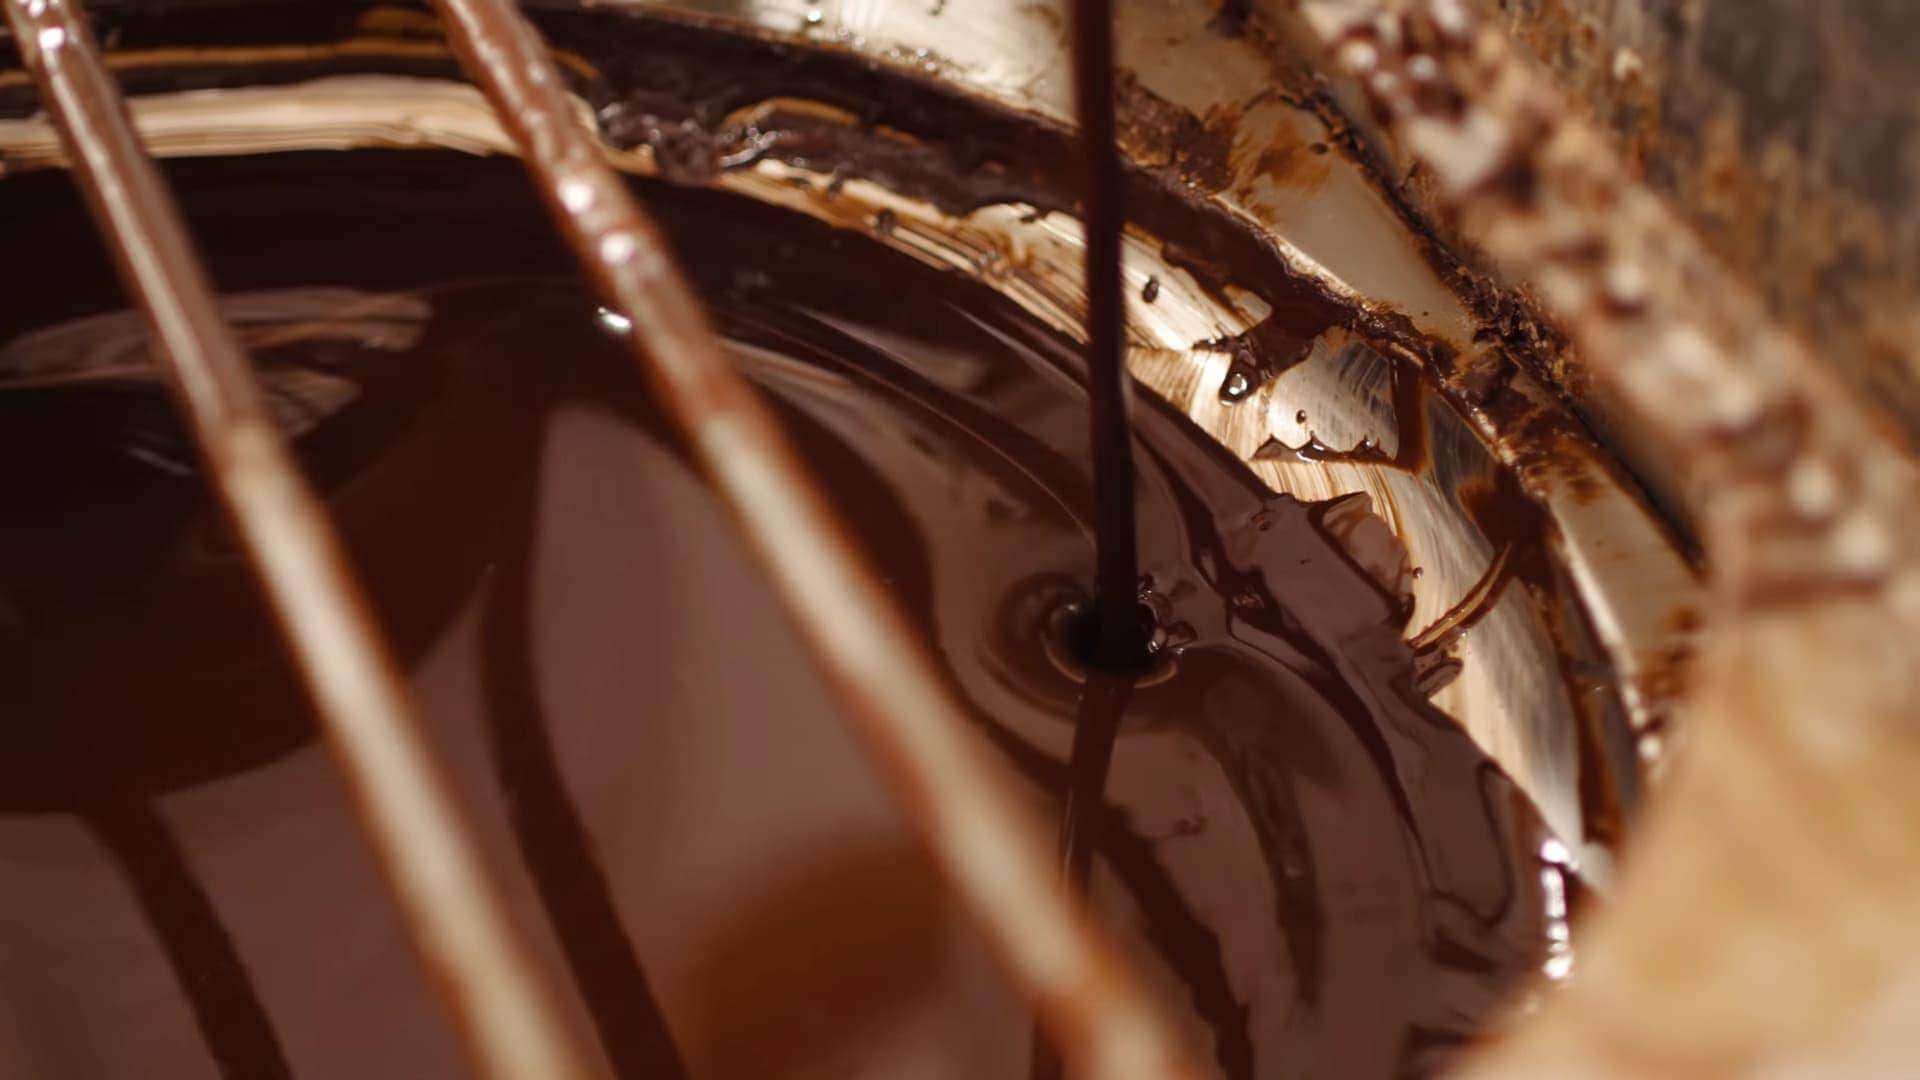 Chocolate Tree - processing chocolate